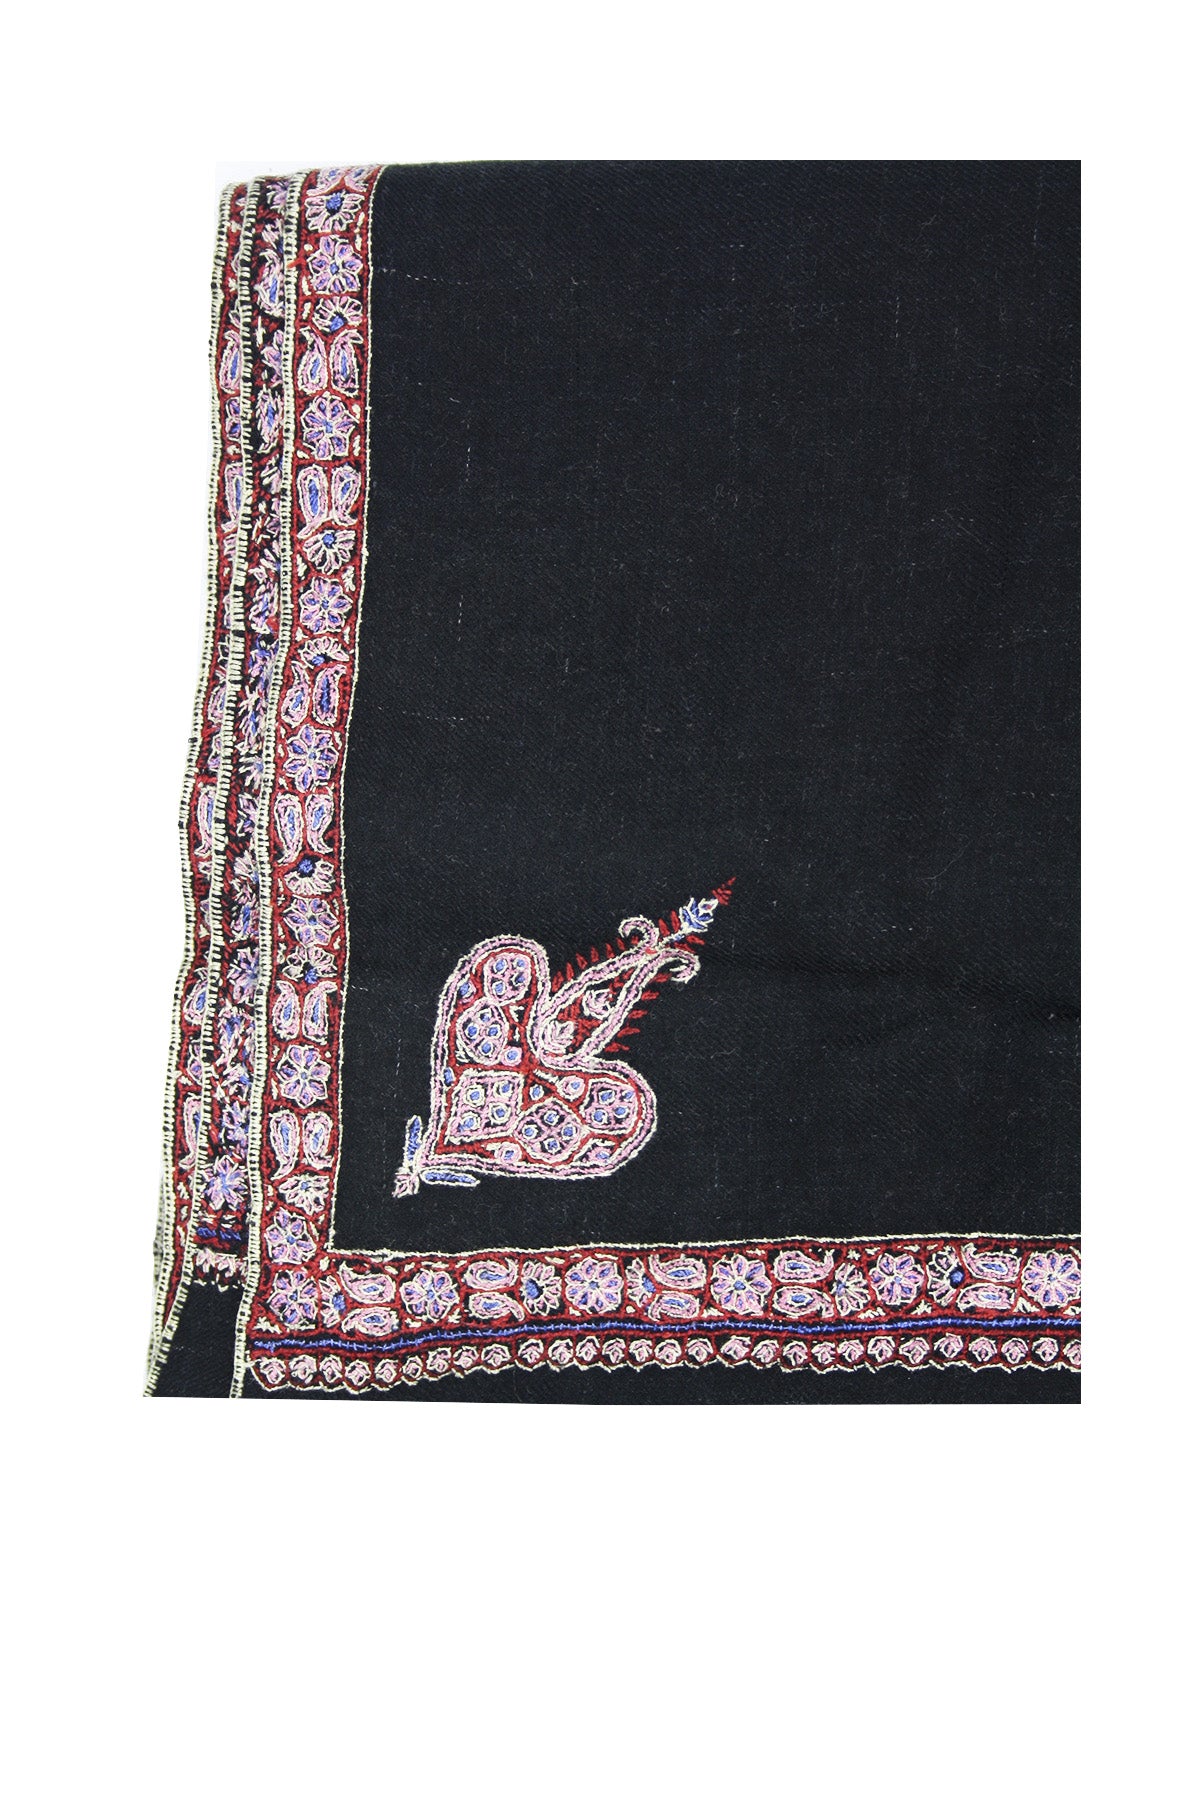 Border Embroidered Cashmere Pashmina Shawl- Black with White Edge